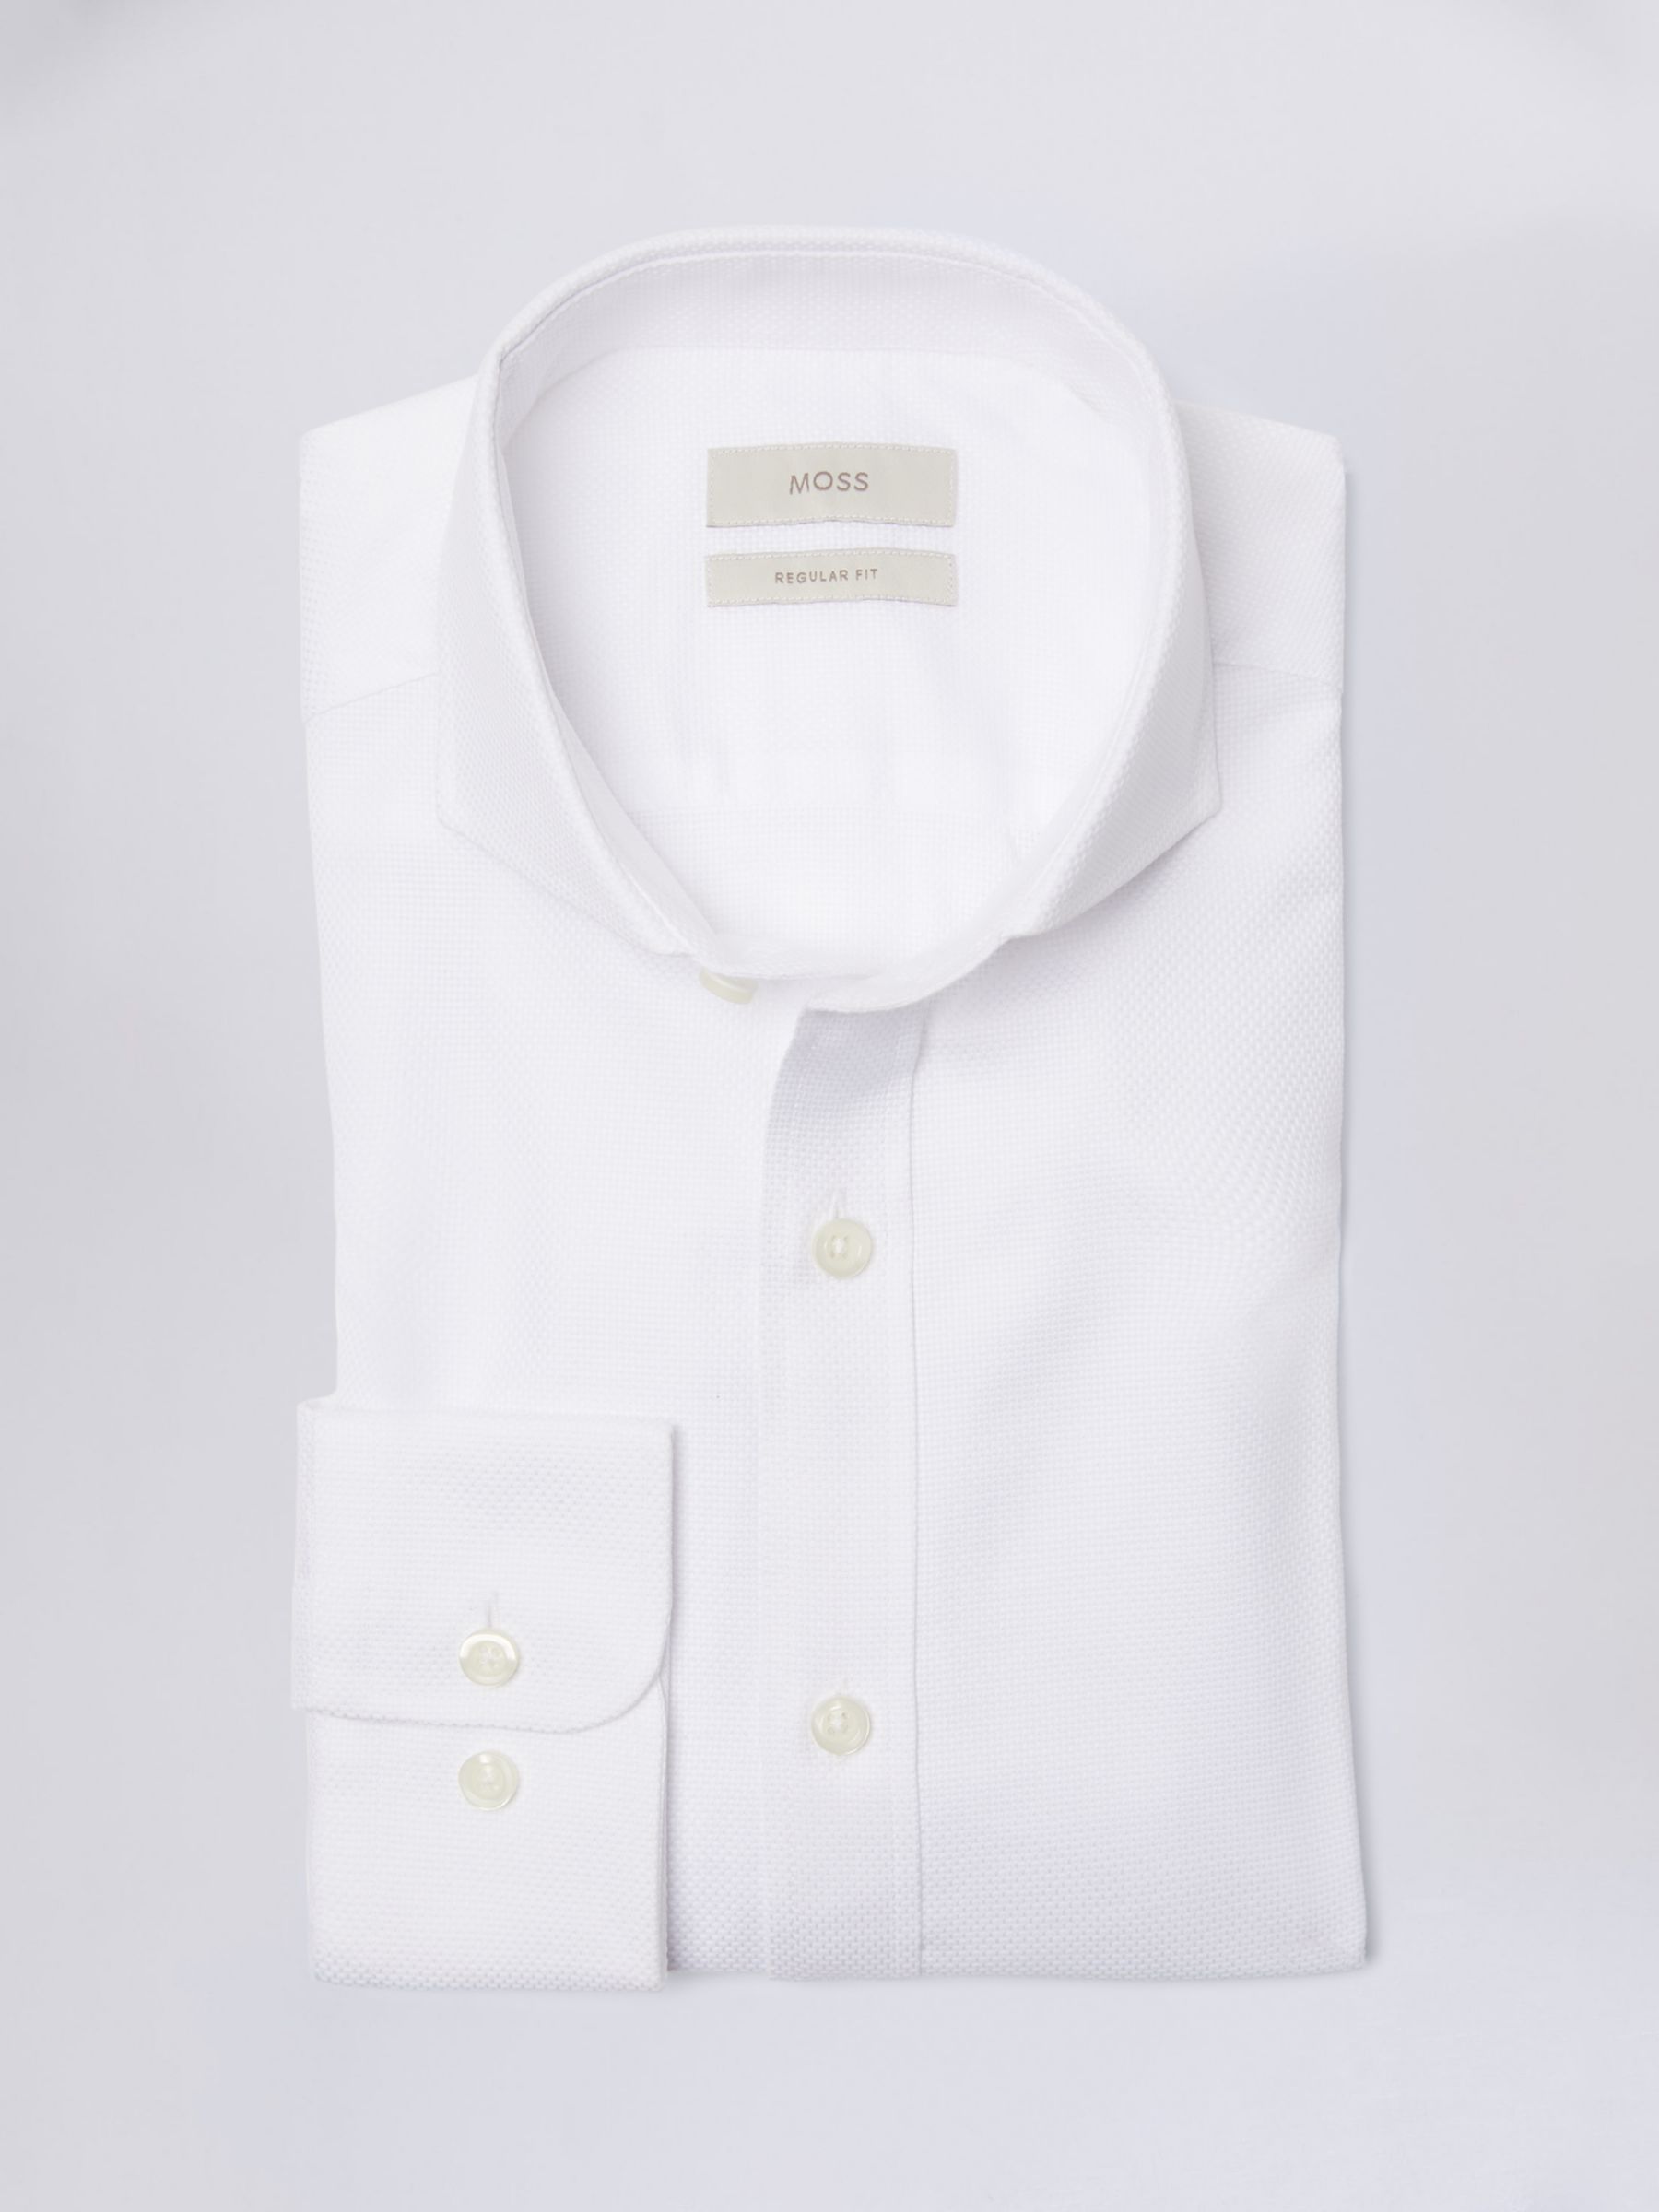 Moss Regular Fit Cotton Dobby Shirt, White, 18.5